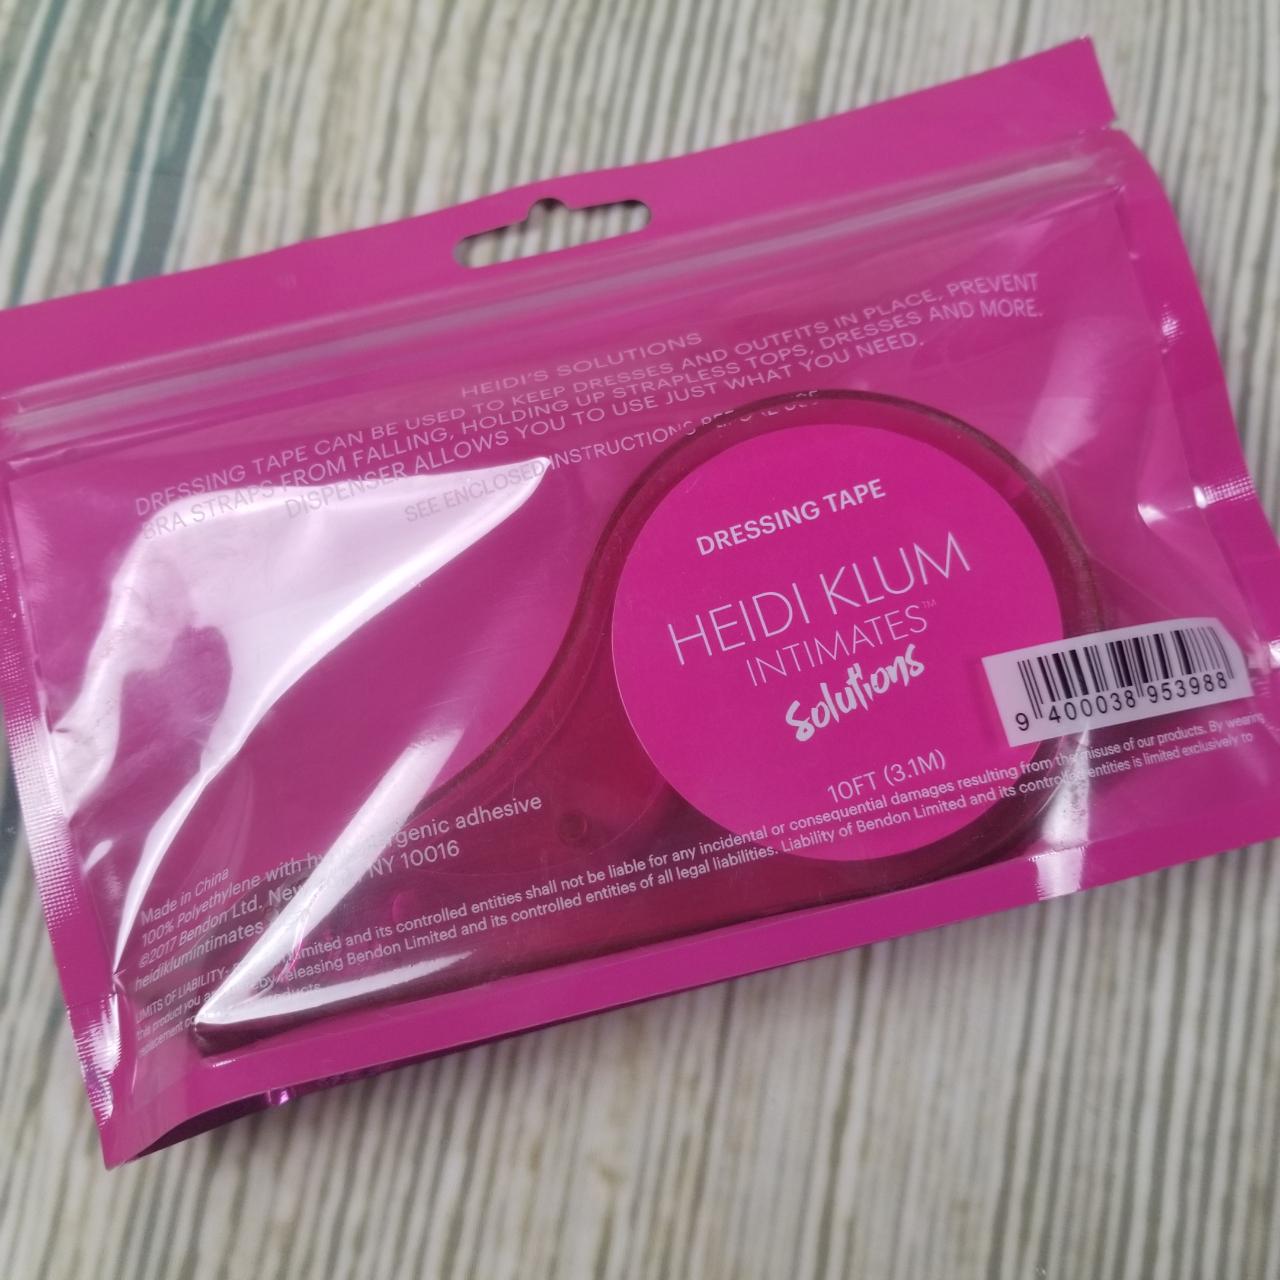 Product Image 3 - New in bag HEIDI KLUM